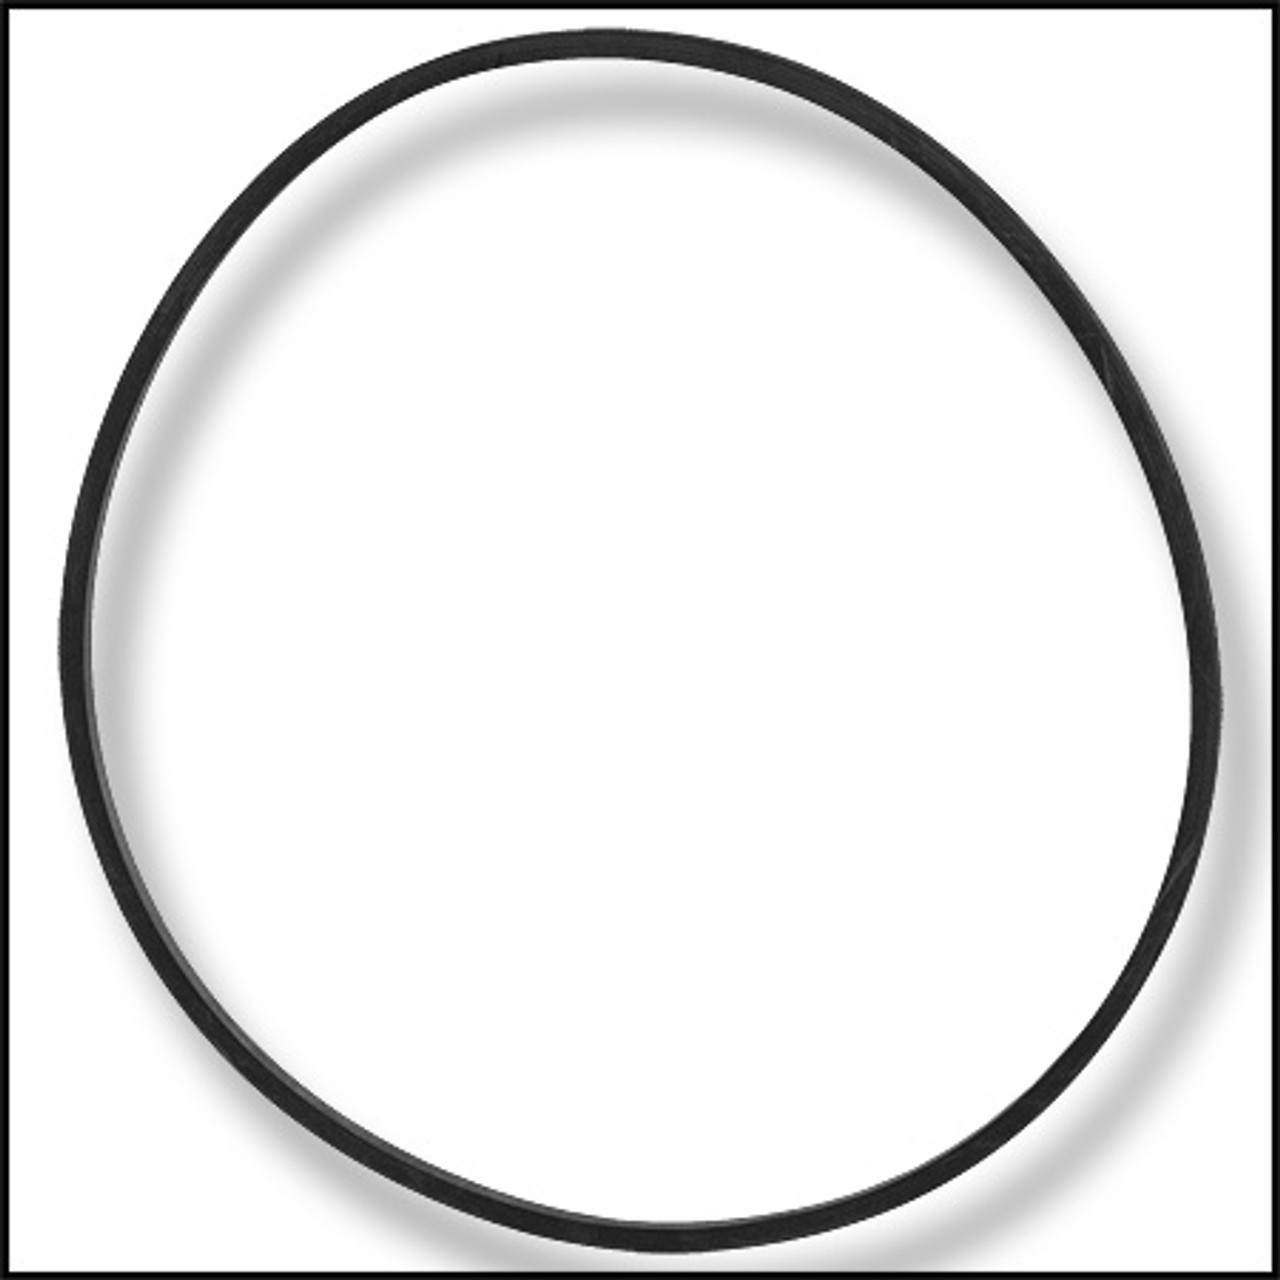 Jacuzzi Square Ring Bracket For LR Pumps (#O-464-0)